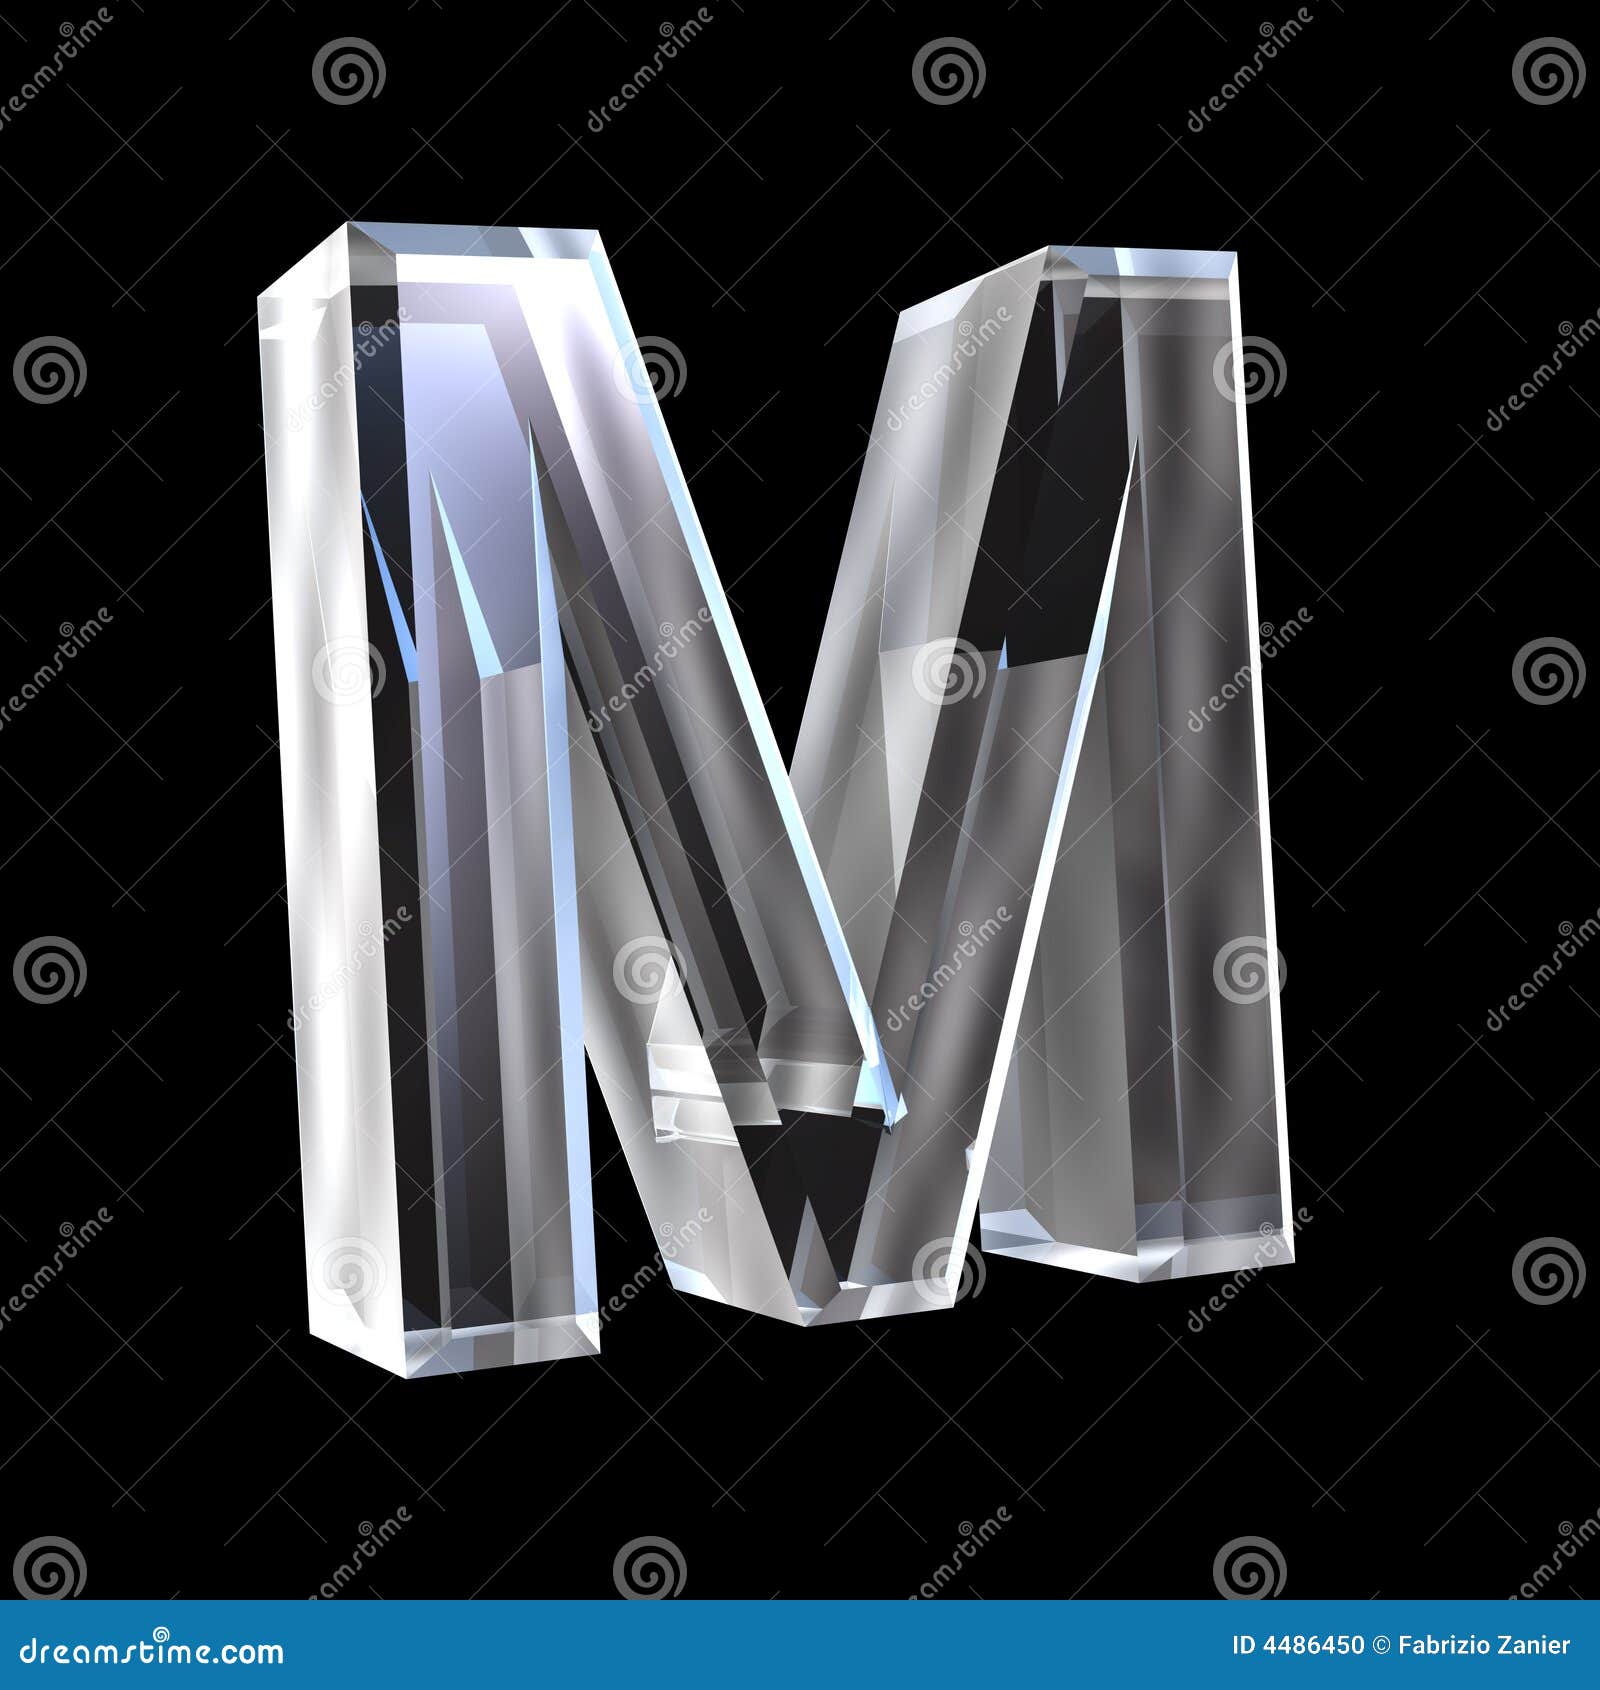 Letter M in glass 3D stock illustration Image of black 